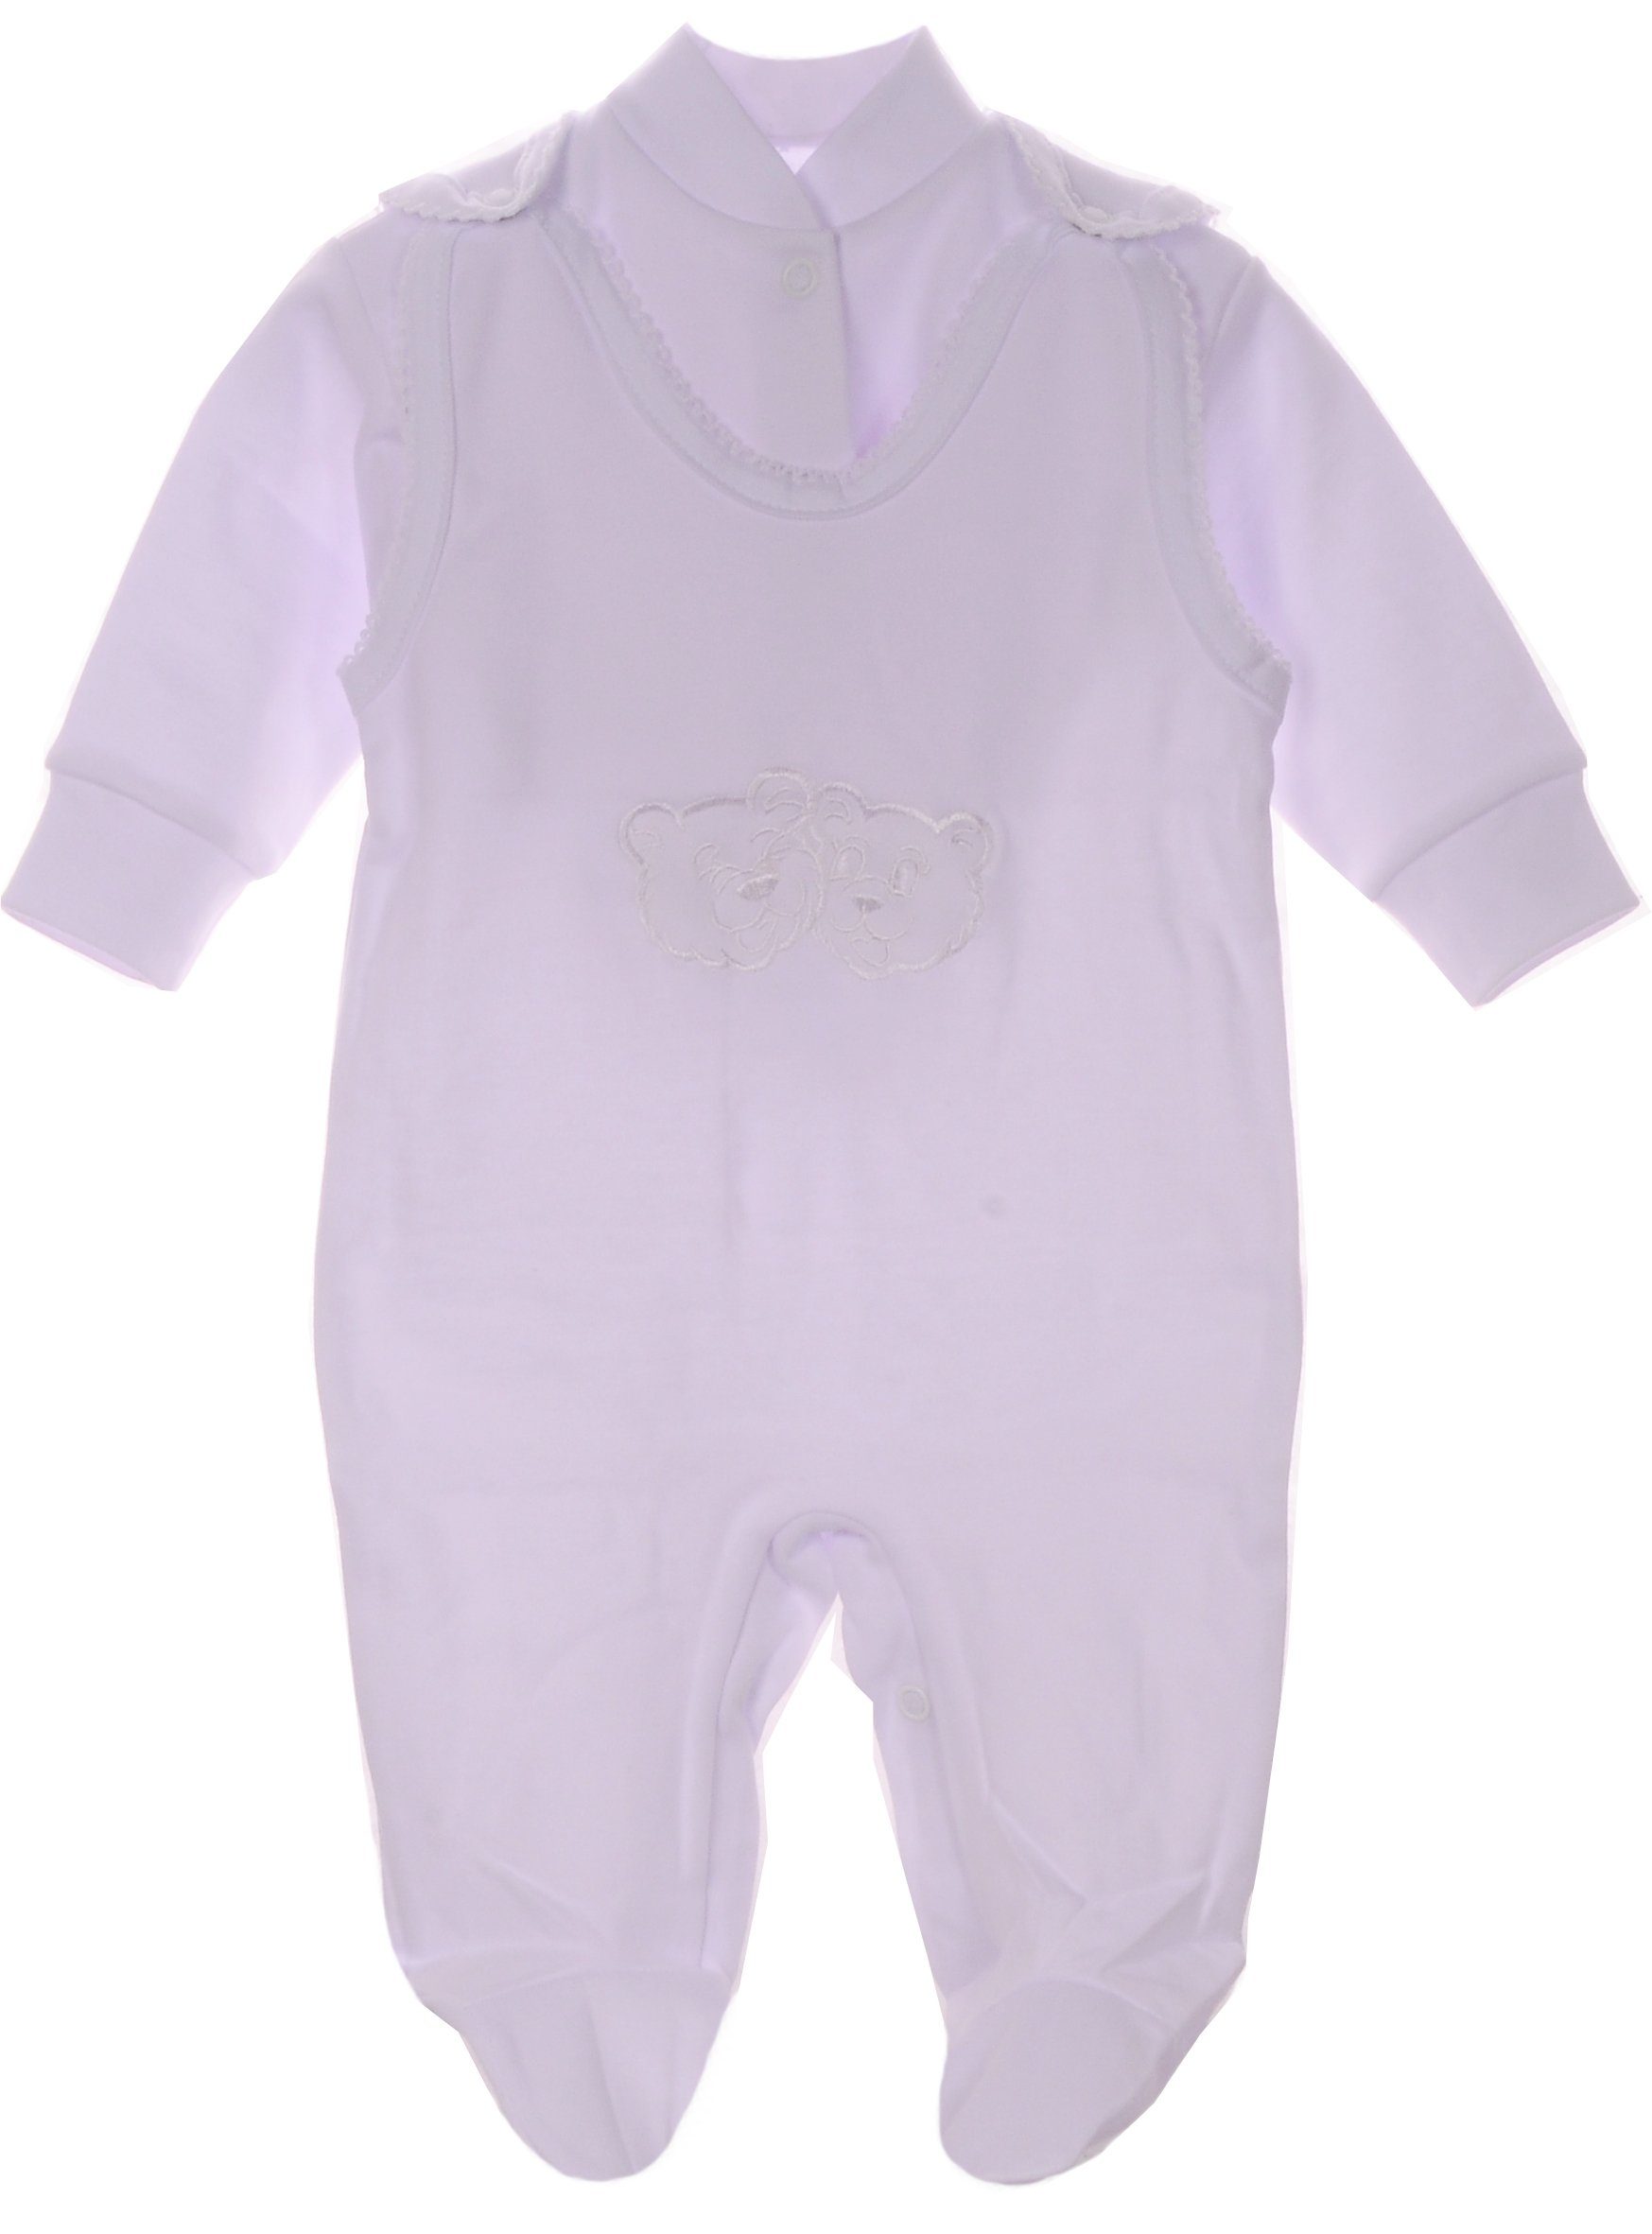 La Bortini Strampler Baby Anzug in Weiß Strampler Hemdchen Set 50 56 62 68 74 80